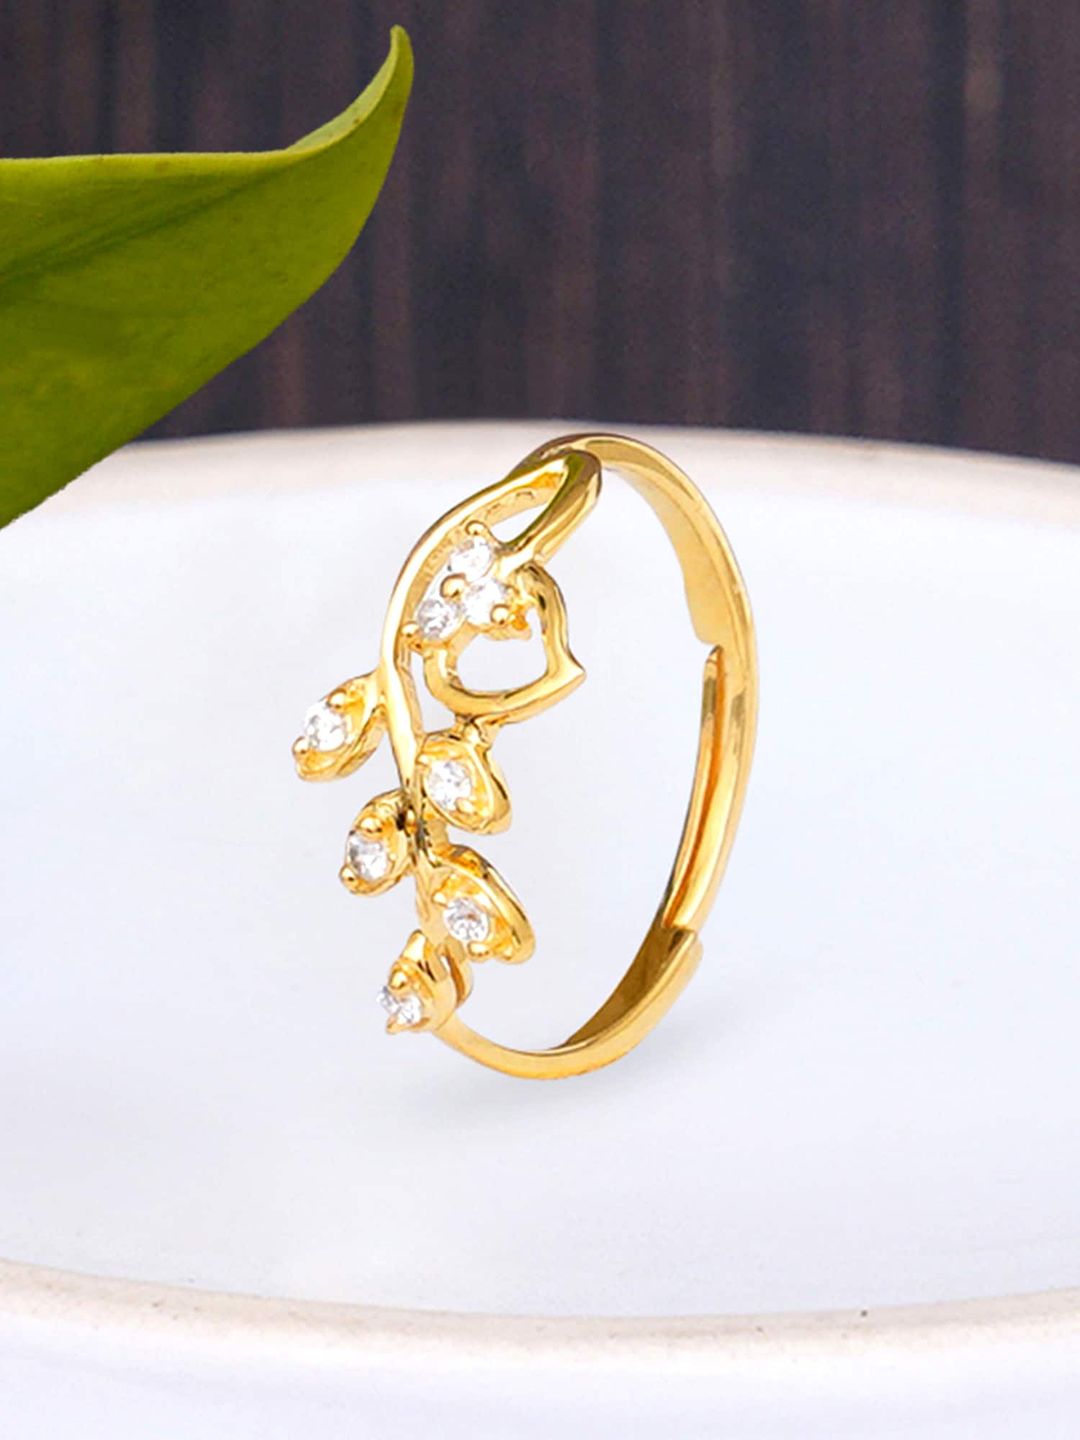 KUNUZ Gold-Plated White CZ-Studded Finger Ring Price in India